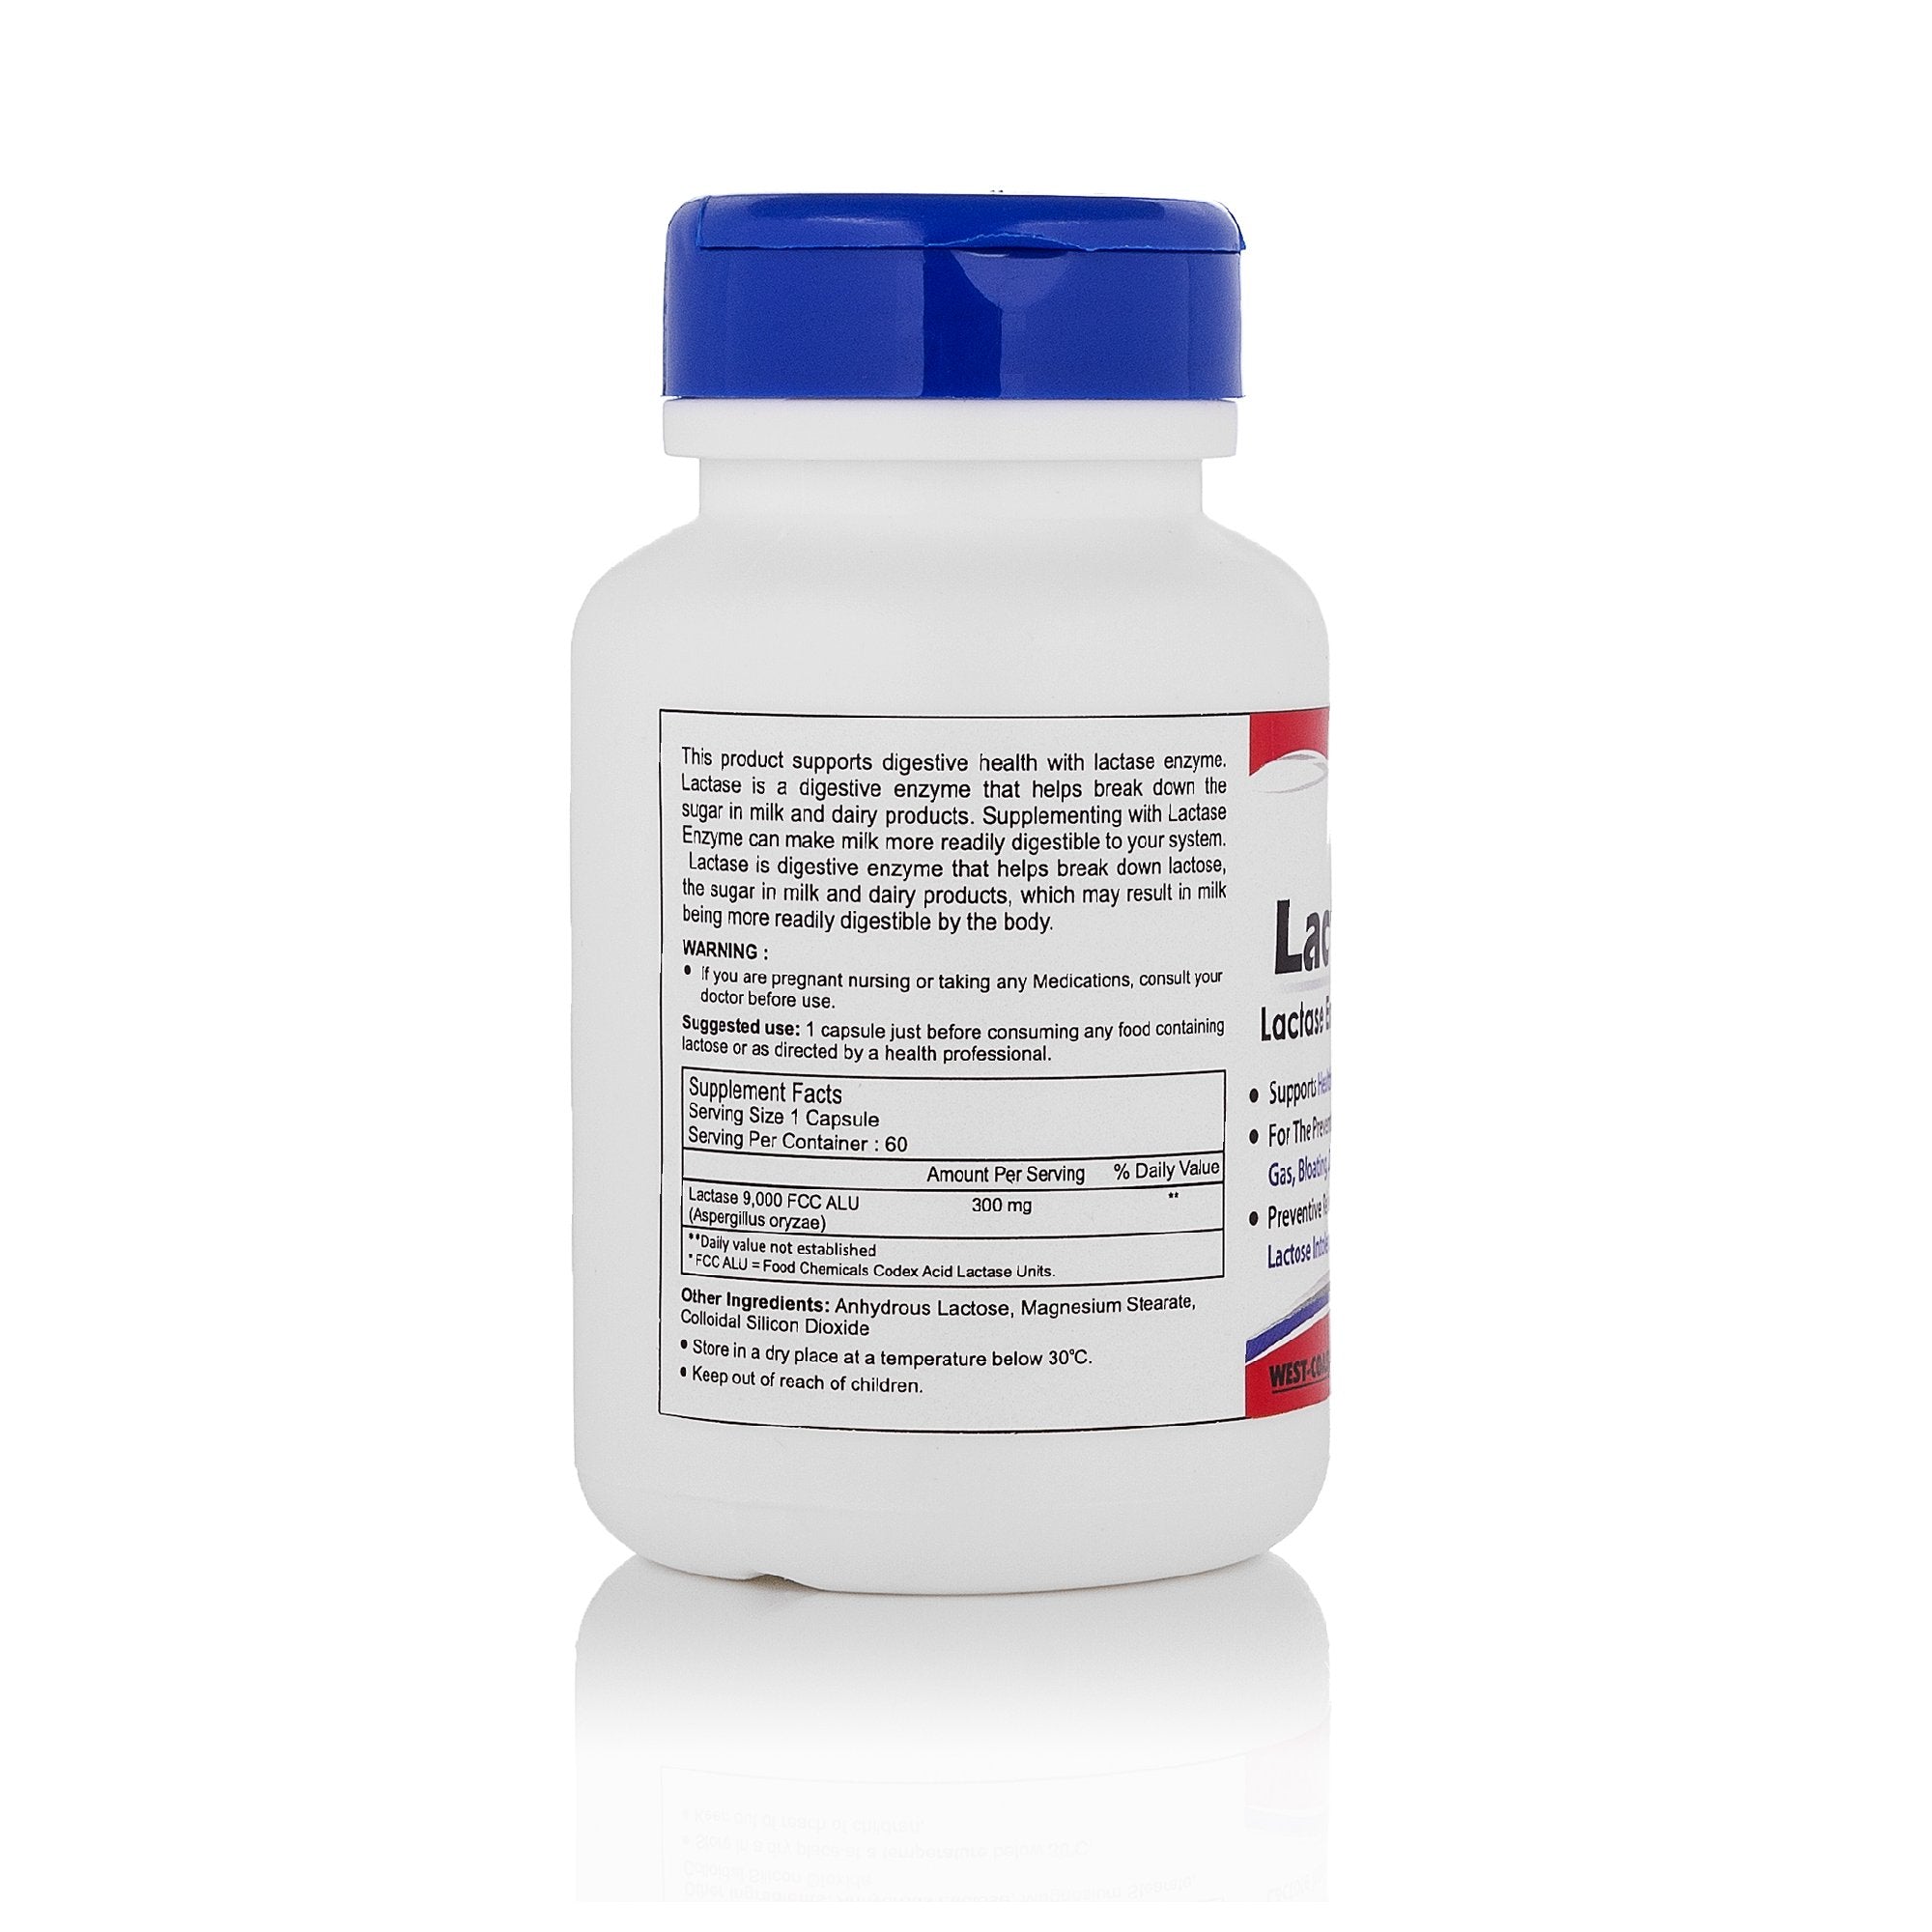 HealthVit Lactaneed Lactase Enzyme Supplement 300mg 60 Capsules For Lactose Intolerance